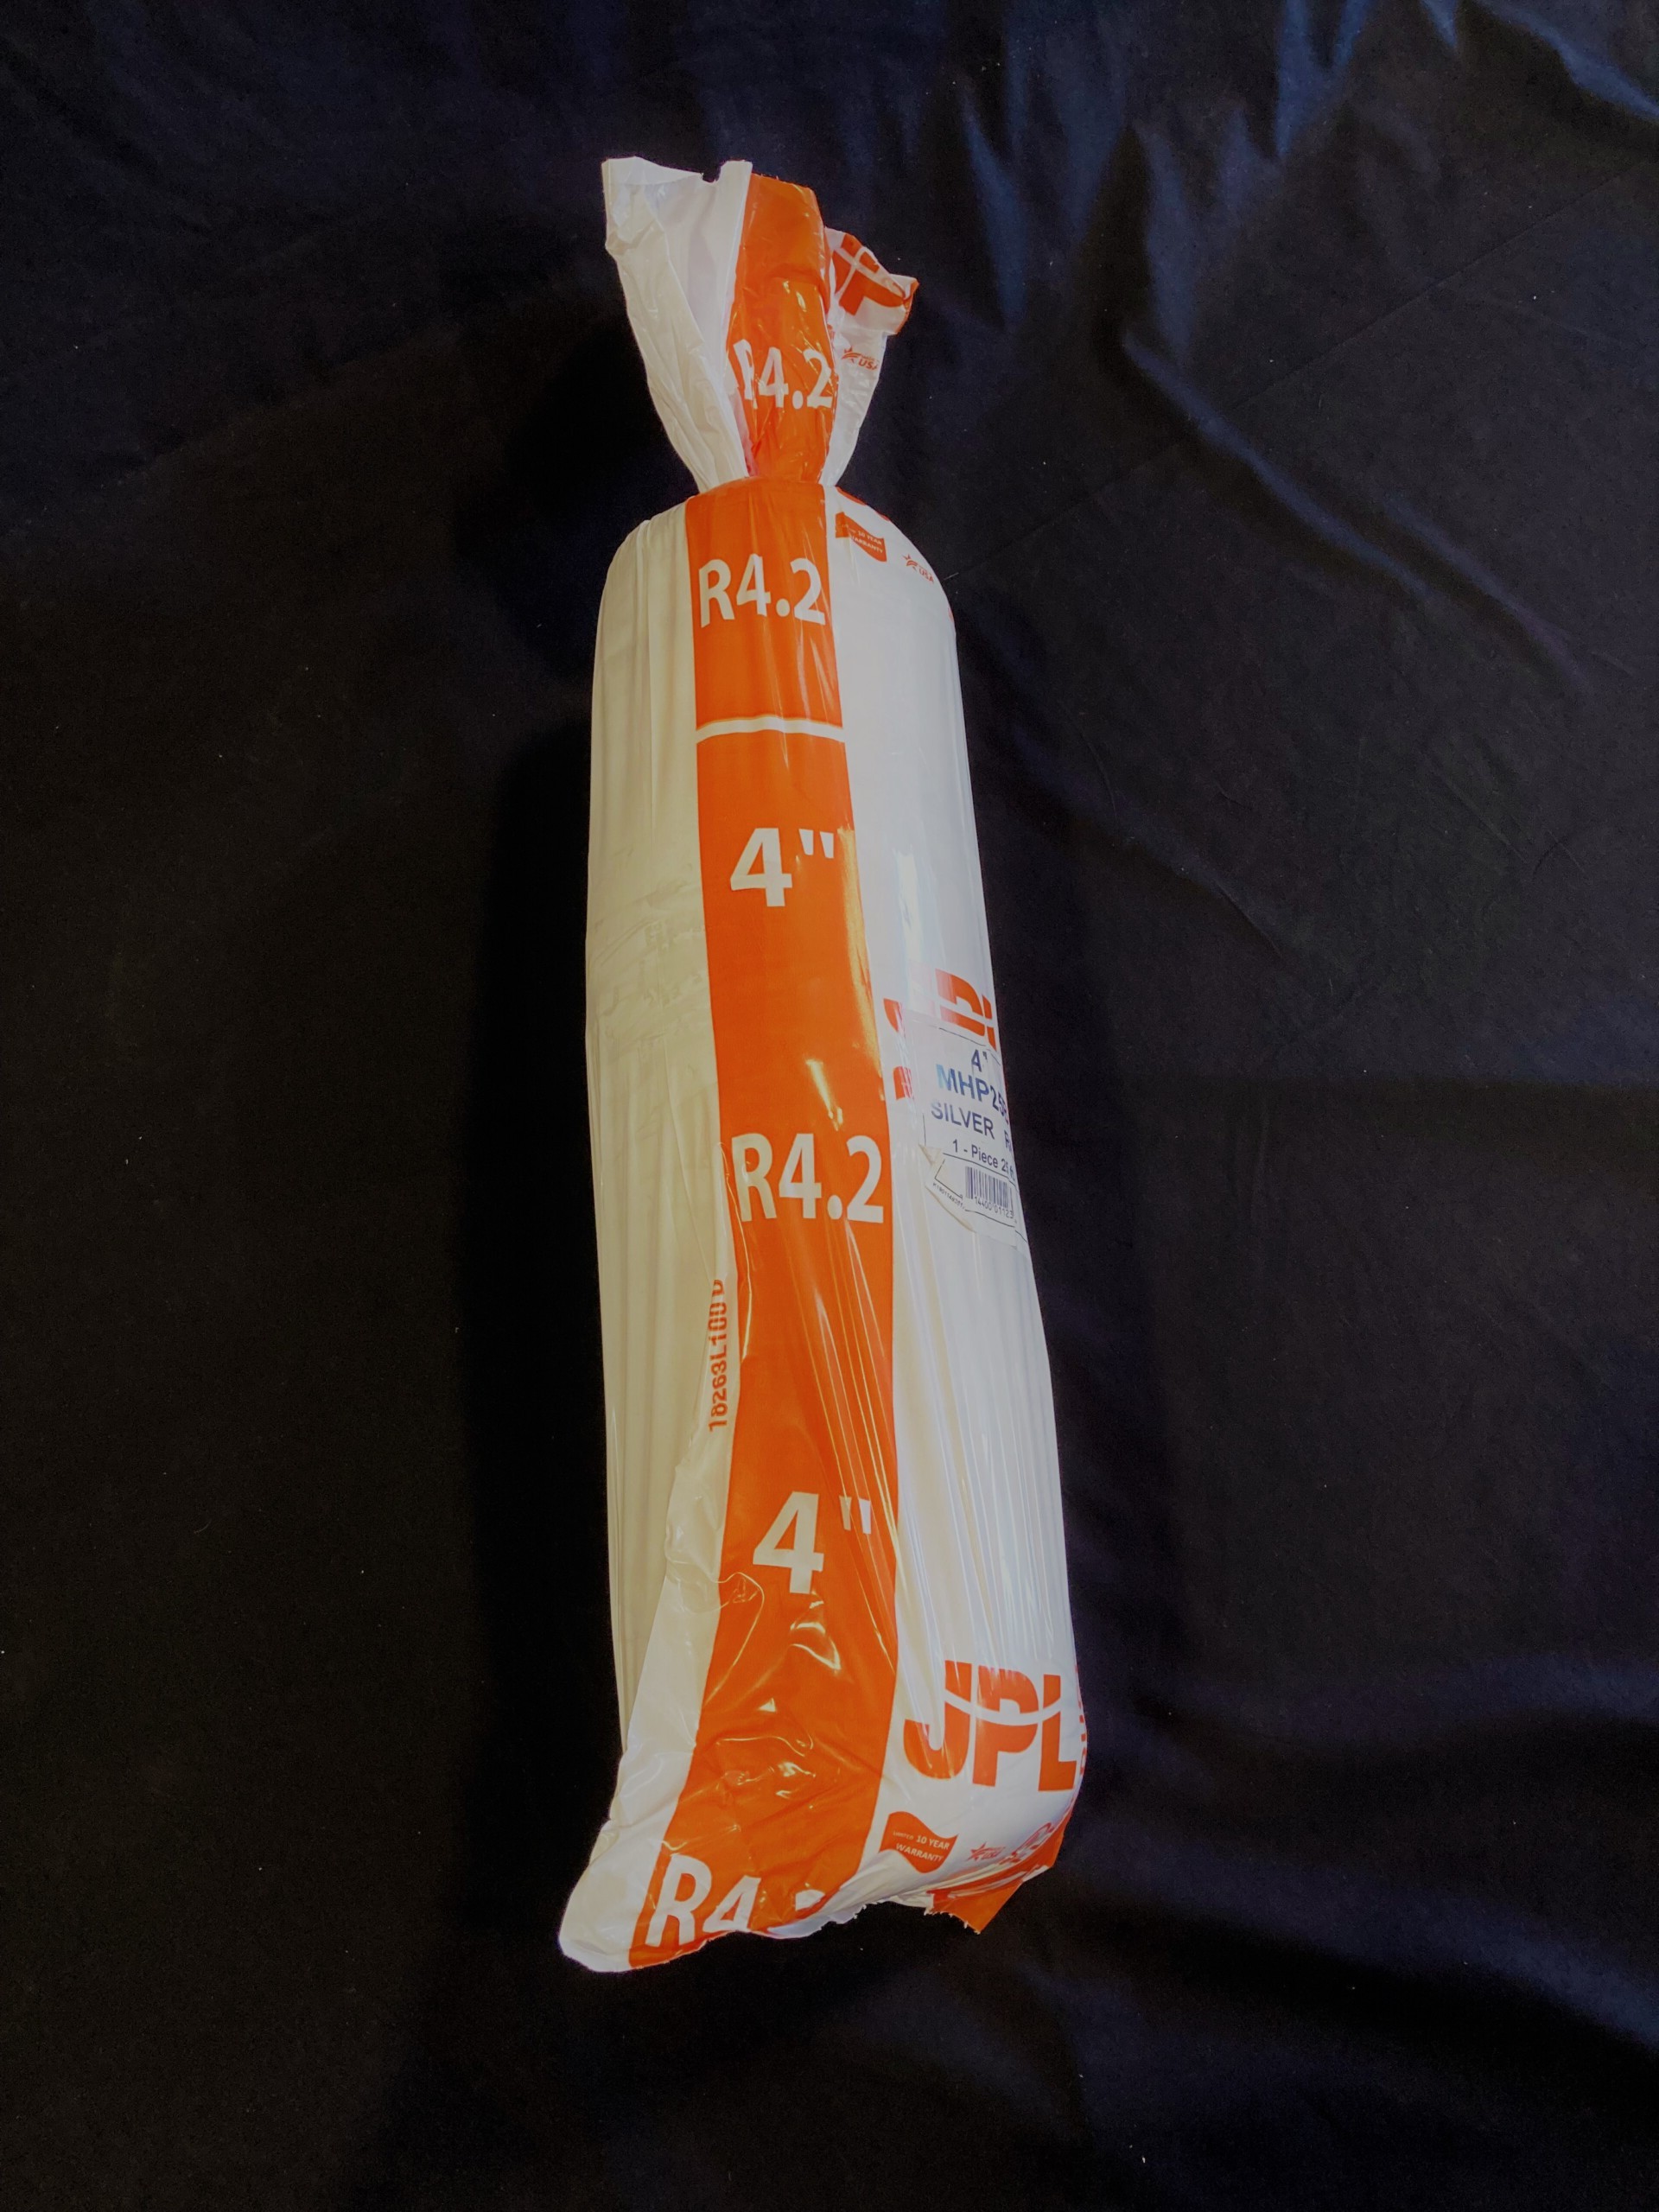 Sealed ductwork materials bag